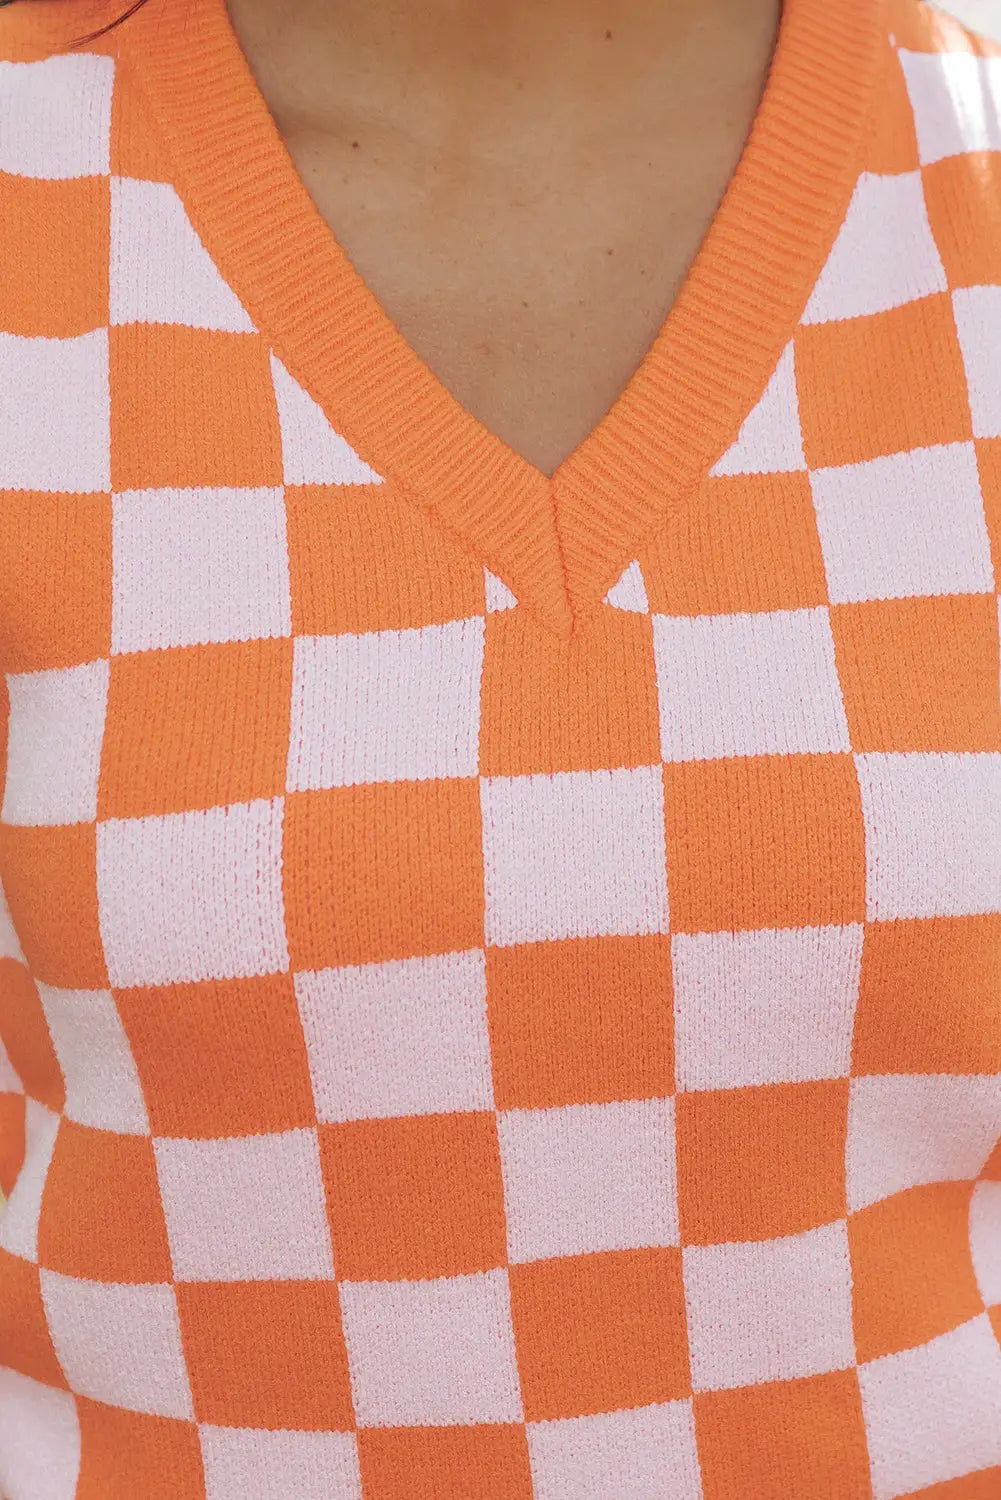 Russet orange checkered v neck knitted sweater vest - tops